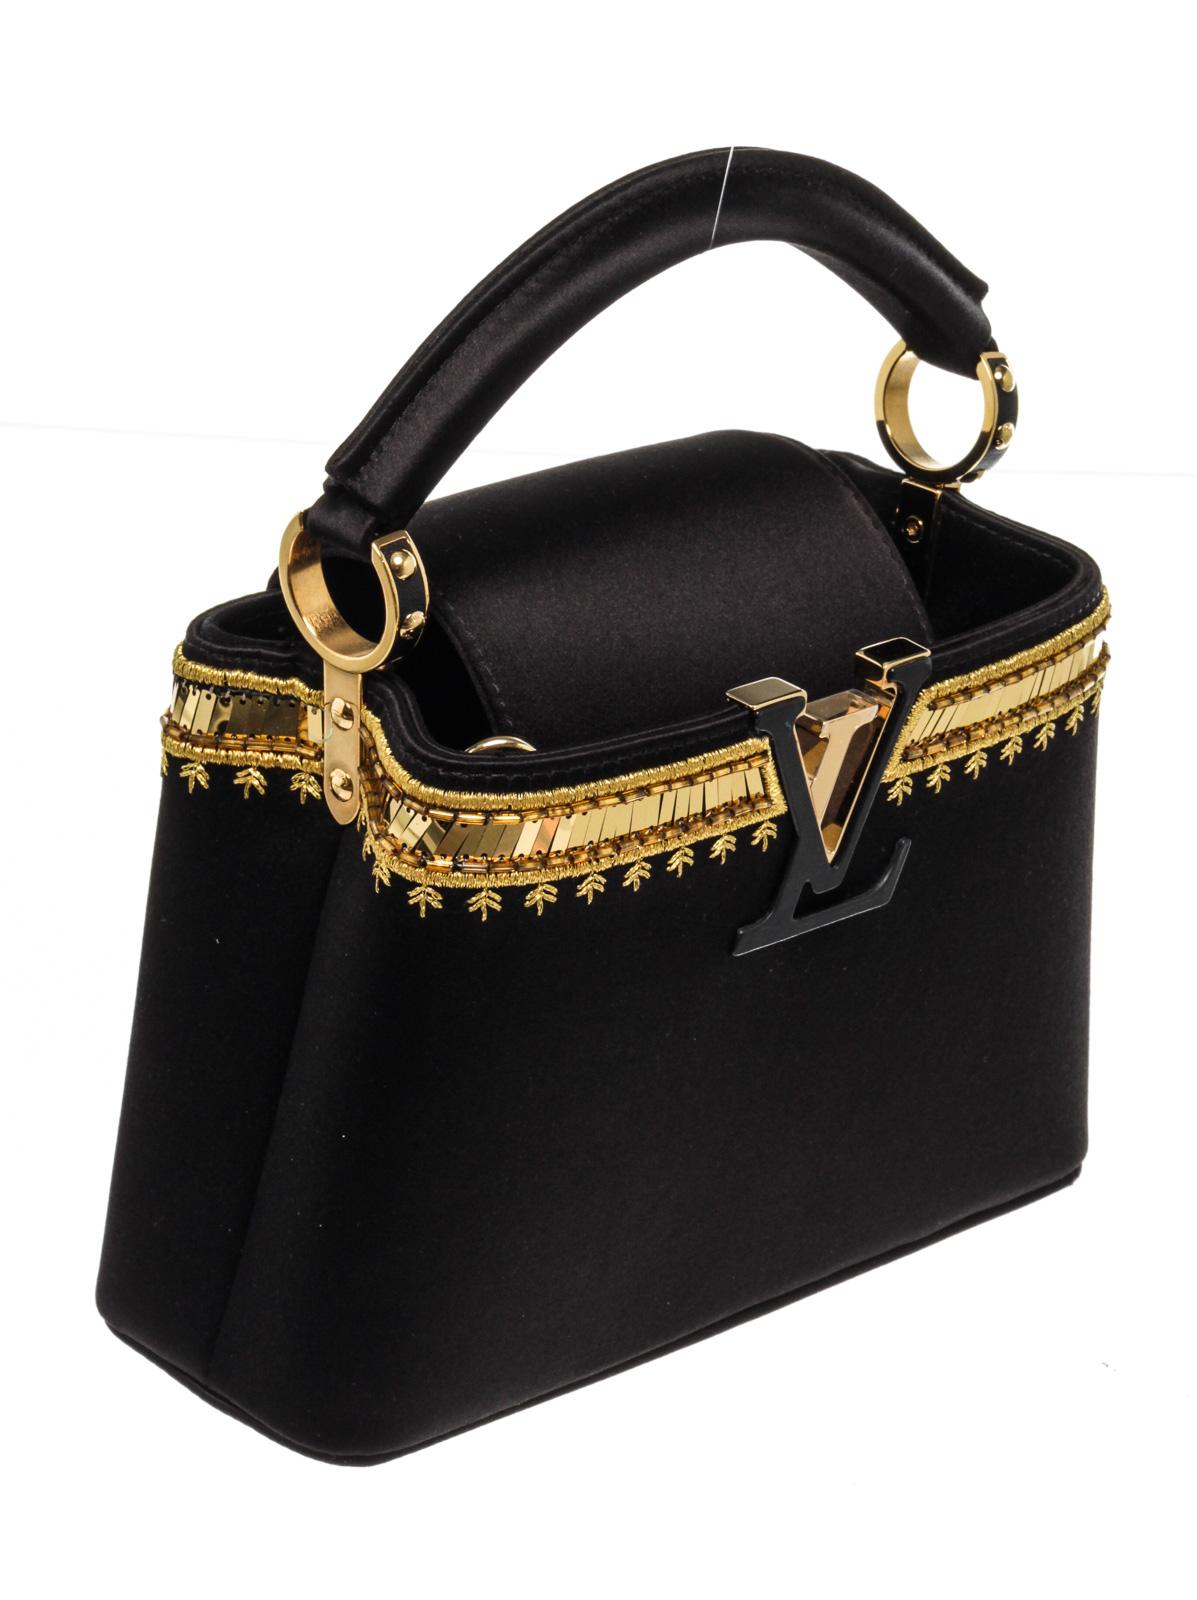 Louis Vuitton Black Leather Capucines Satin Handbag In Good Condition For Sale In Irvine, CA